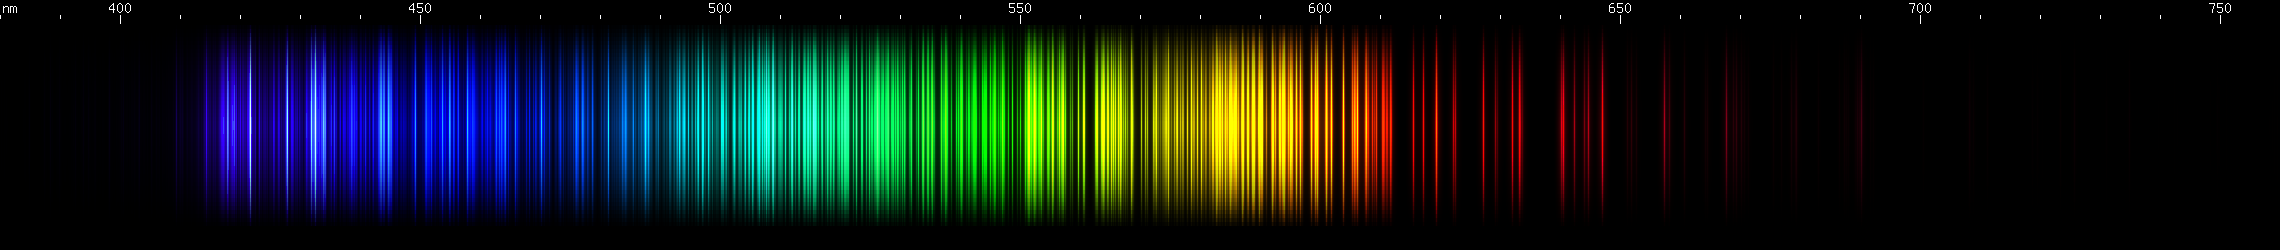 Spectral Lines of Terbium